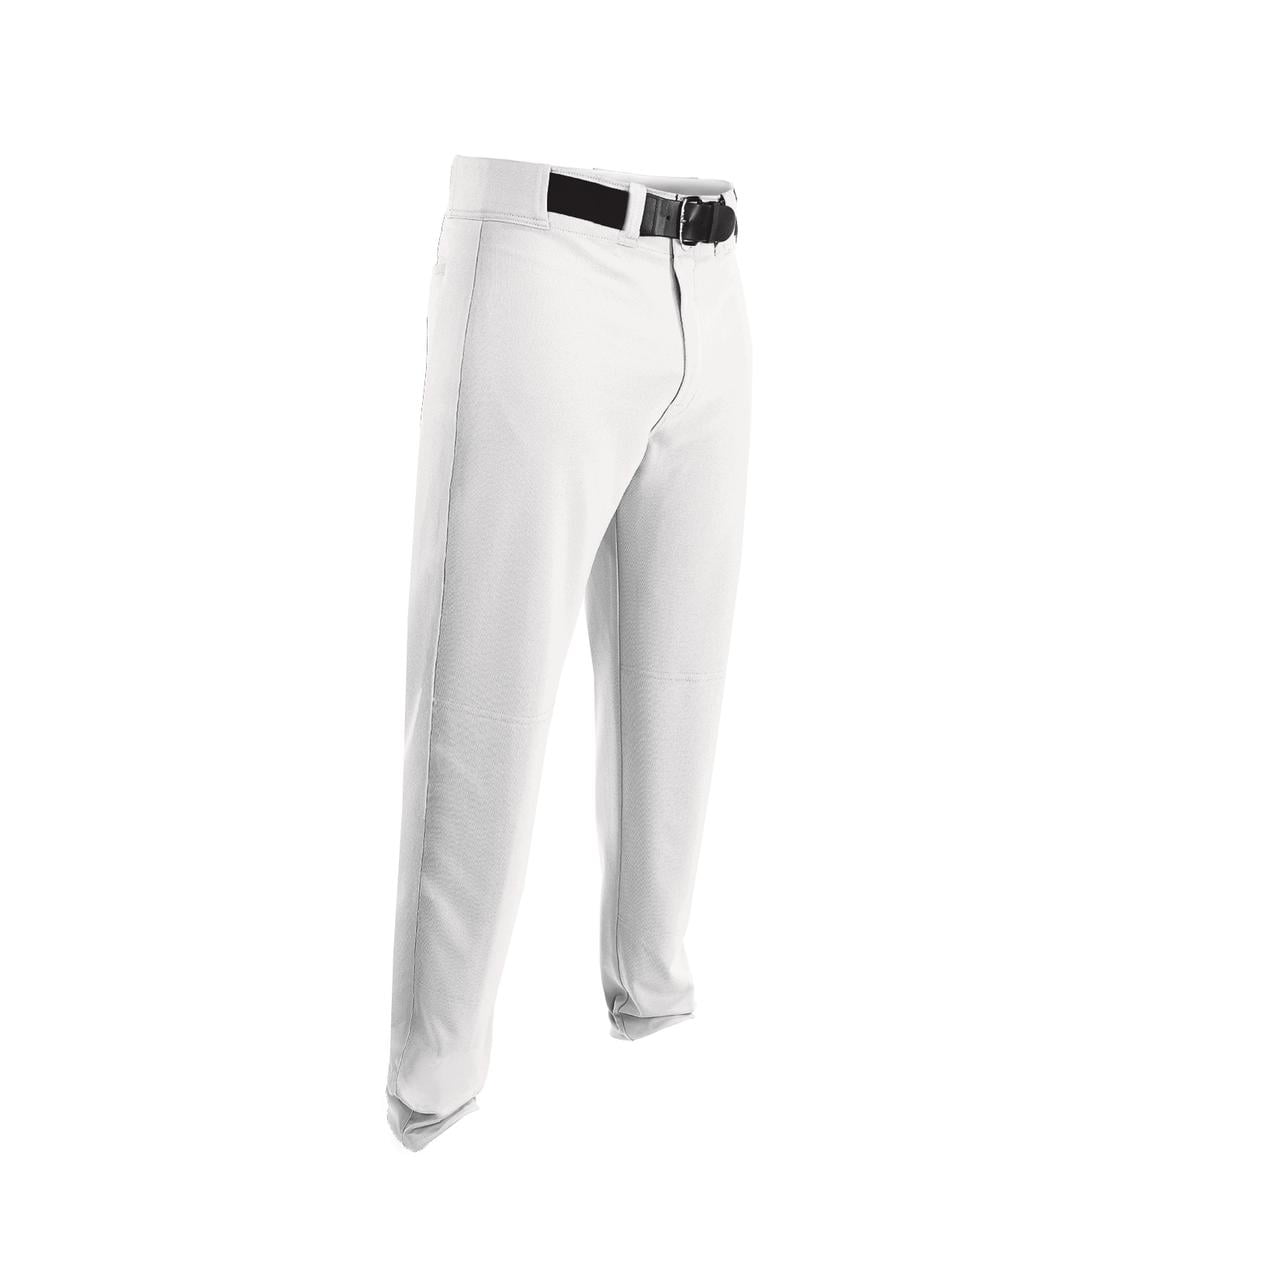 Rawlings Youth Boys White Buttoned Baseball Pants Elastic Bottoms Medium M New 